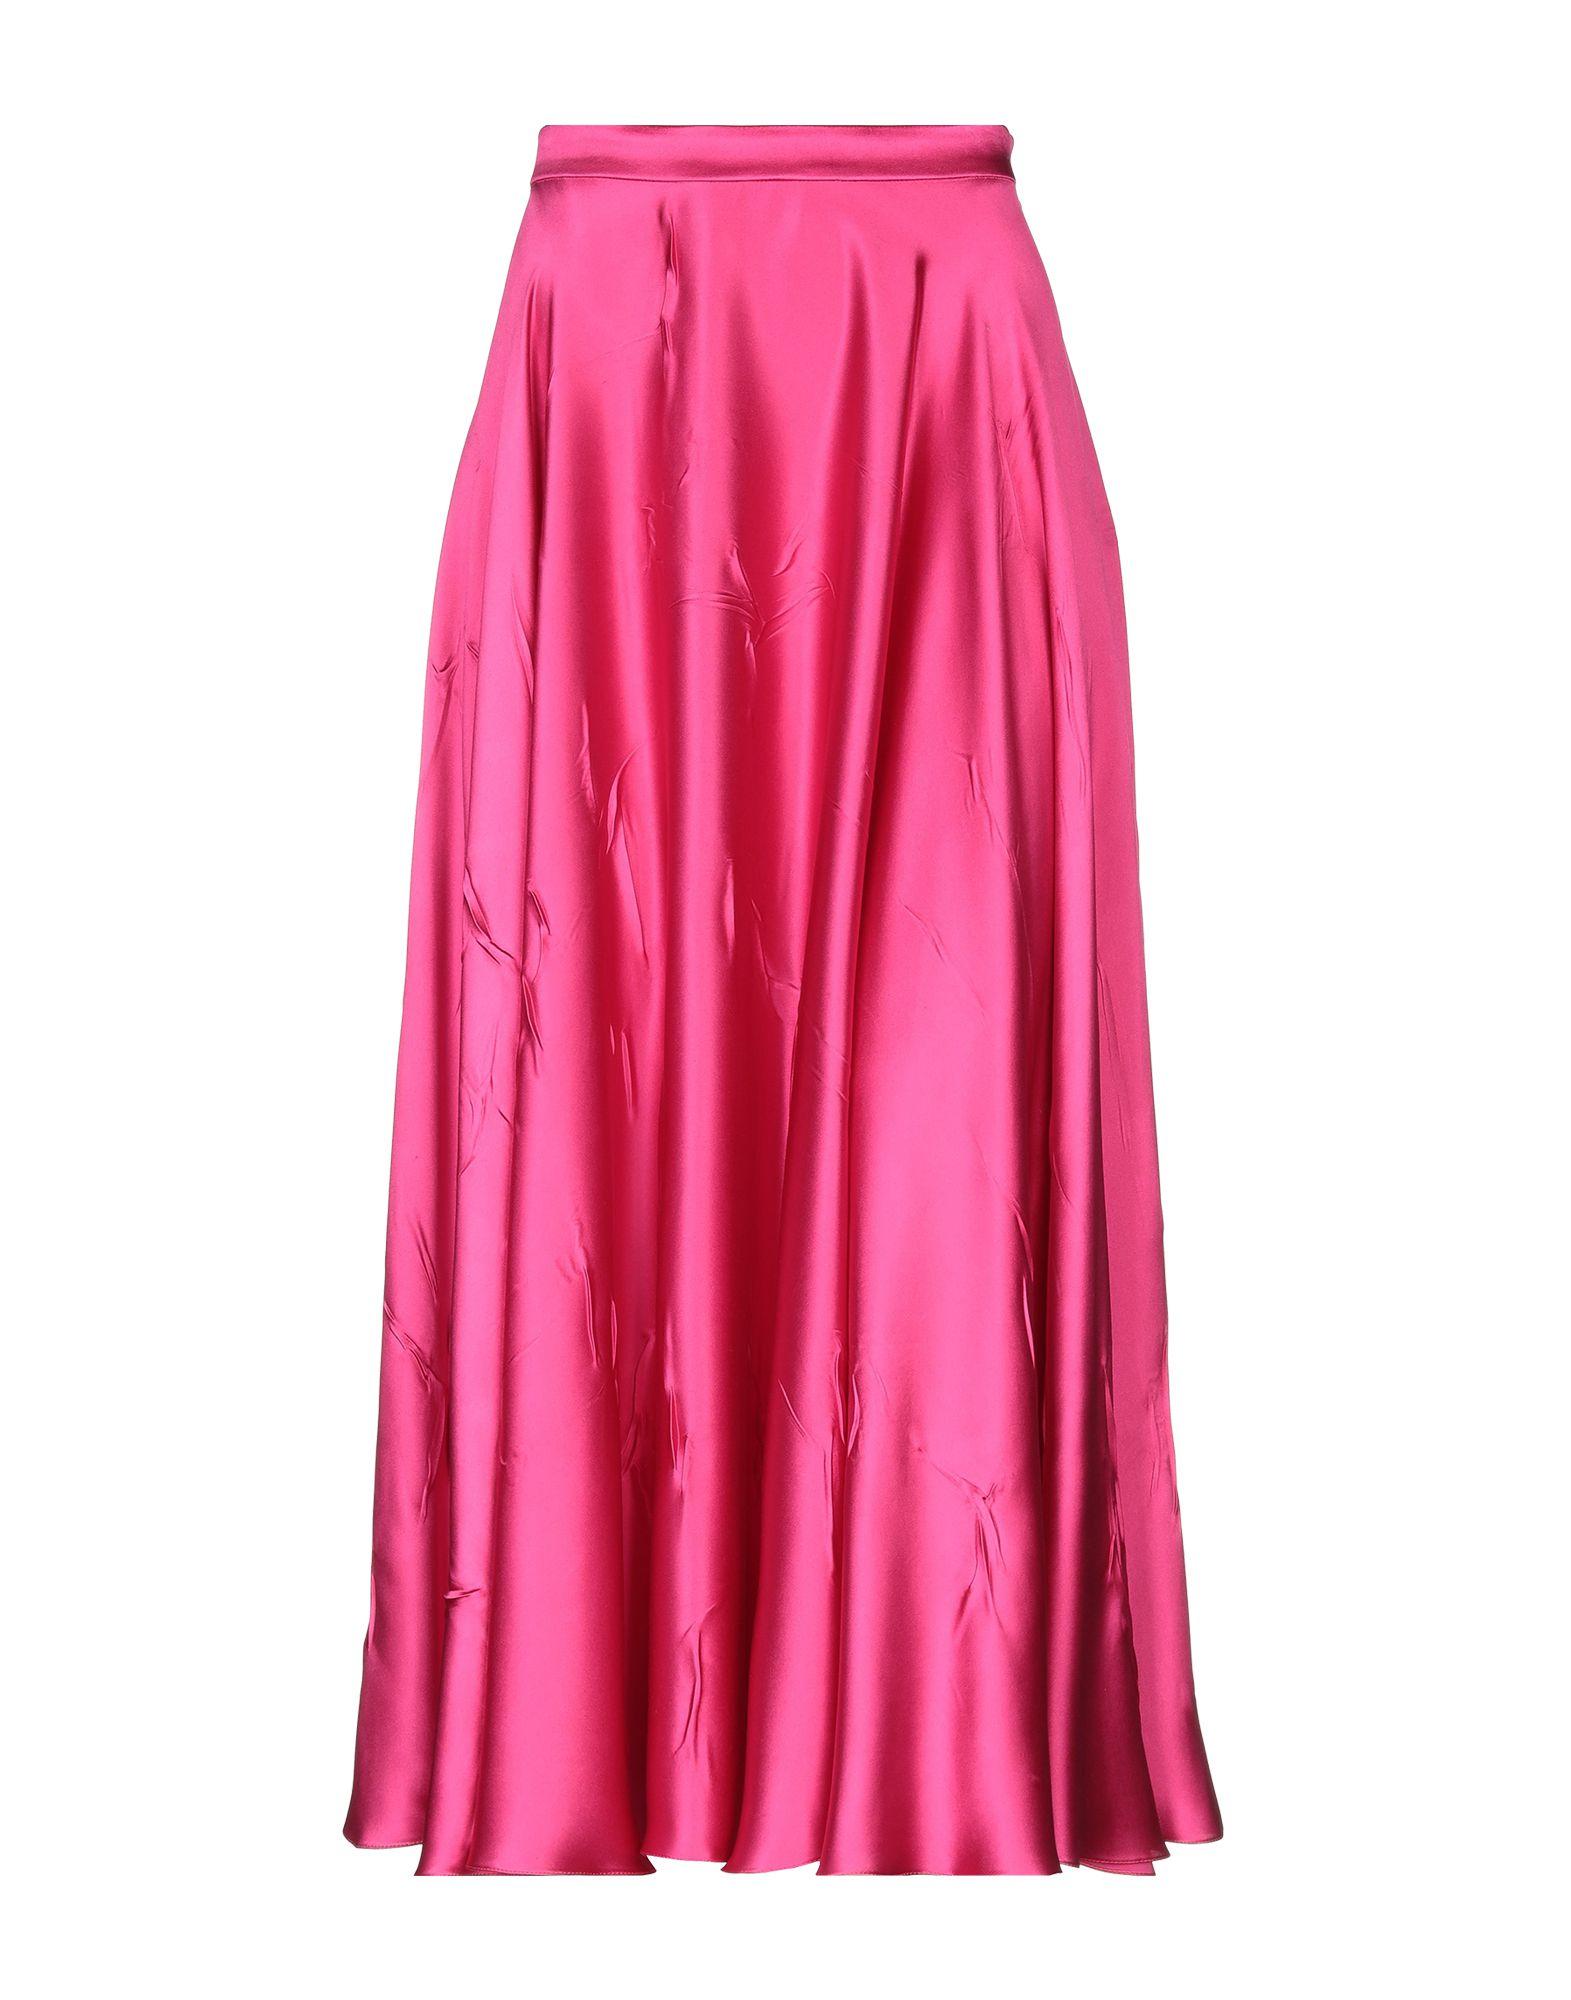 Gucci Satin Long Skirt in Fuchsia (Pink) - Lyst